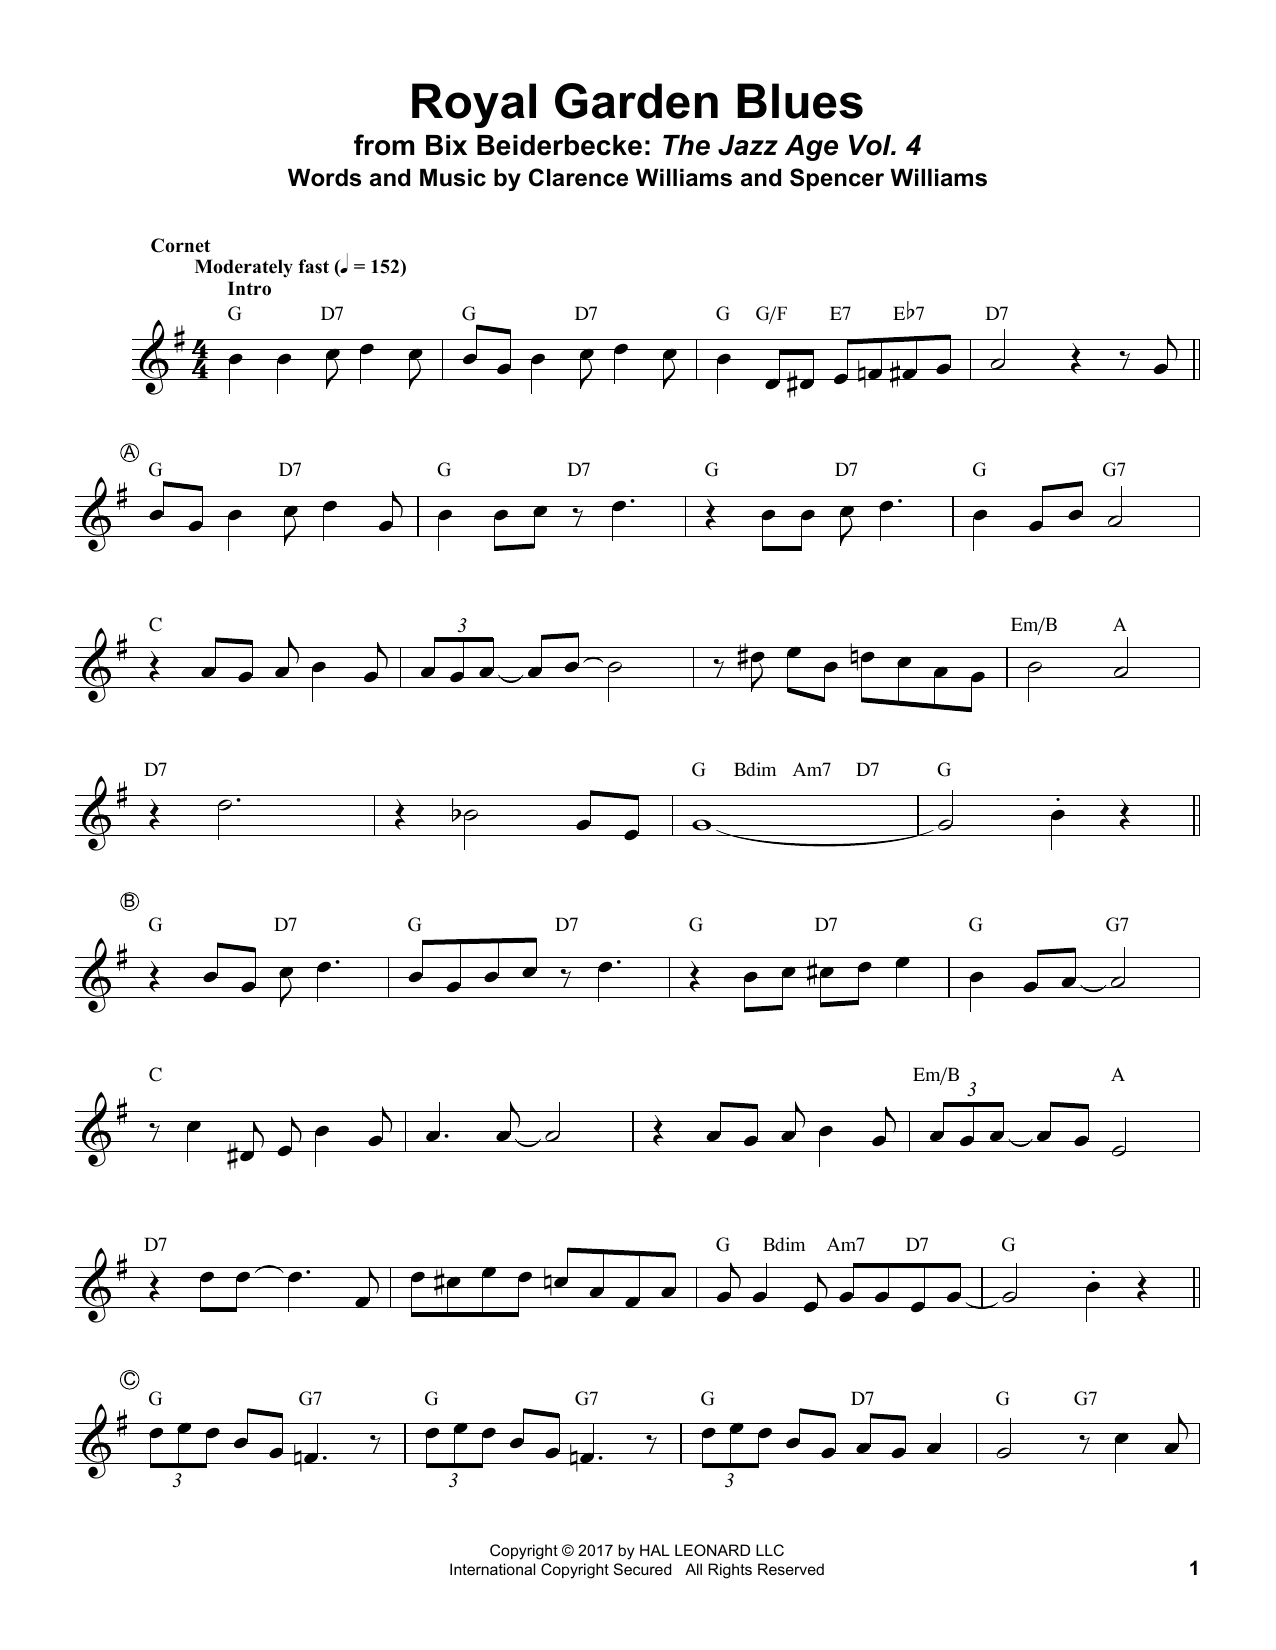 Bix Beiderbecke Royal Garden Blues Sheet Music Notes & Chords for Trumpet Transcription - Download or Print PDF